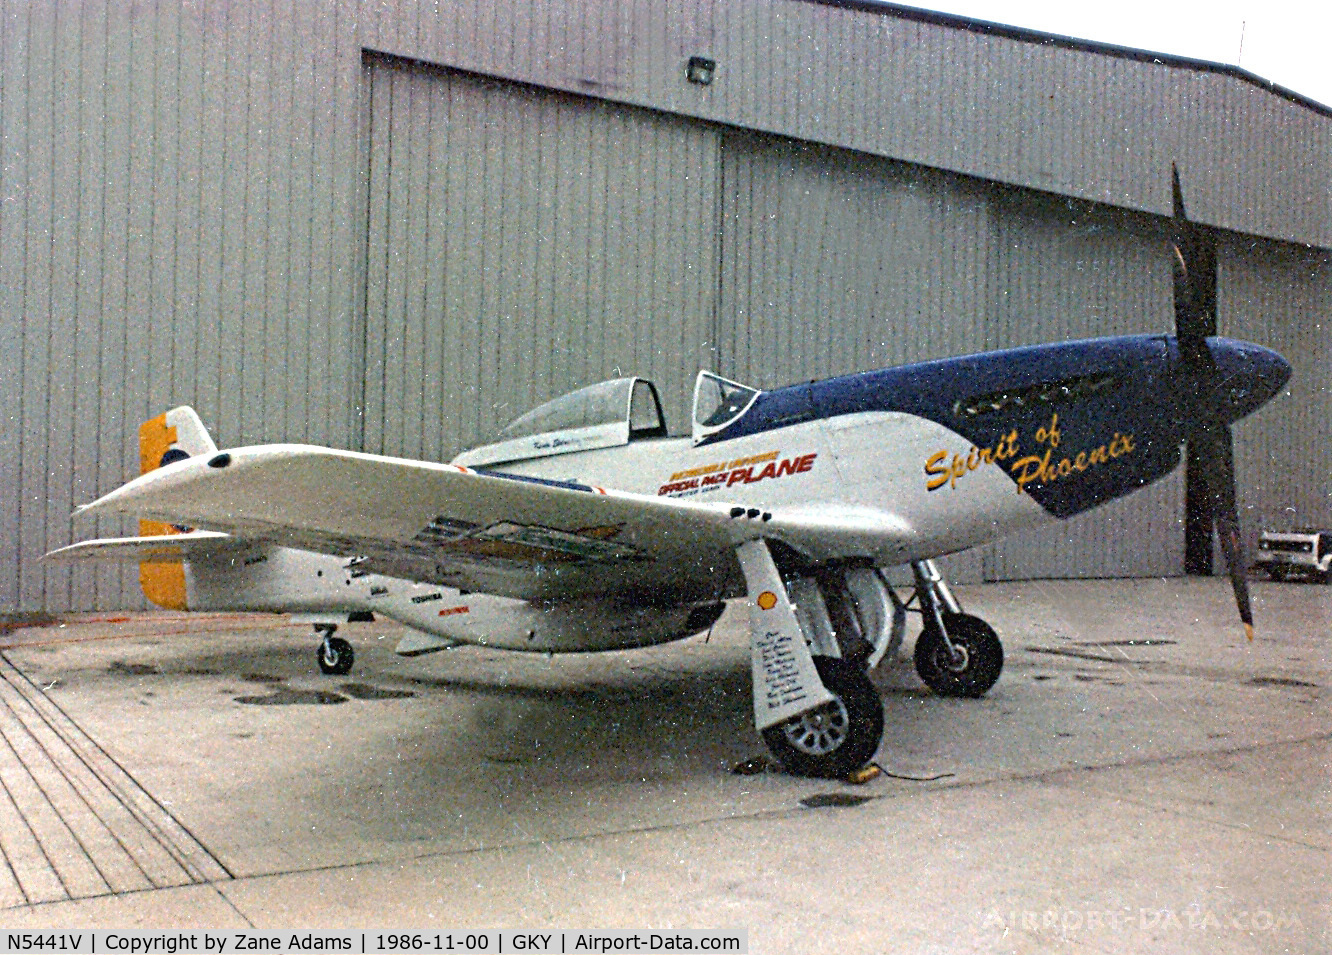 N5441V, 1961 North American F-51D Mustang C/N 45-11582, Spirit of Phoenix racing colors - At Arlington Municipal